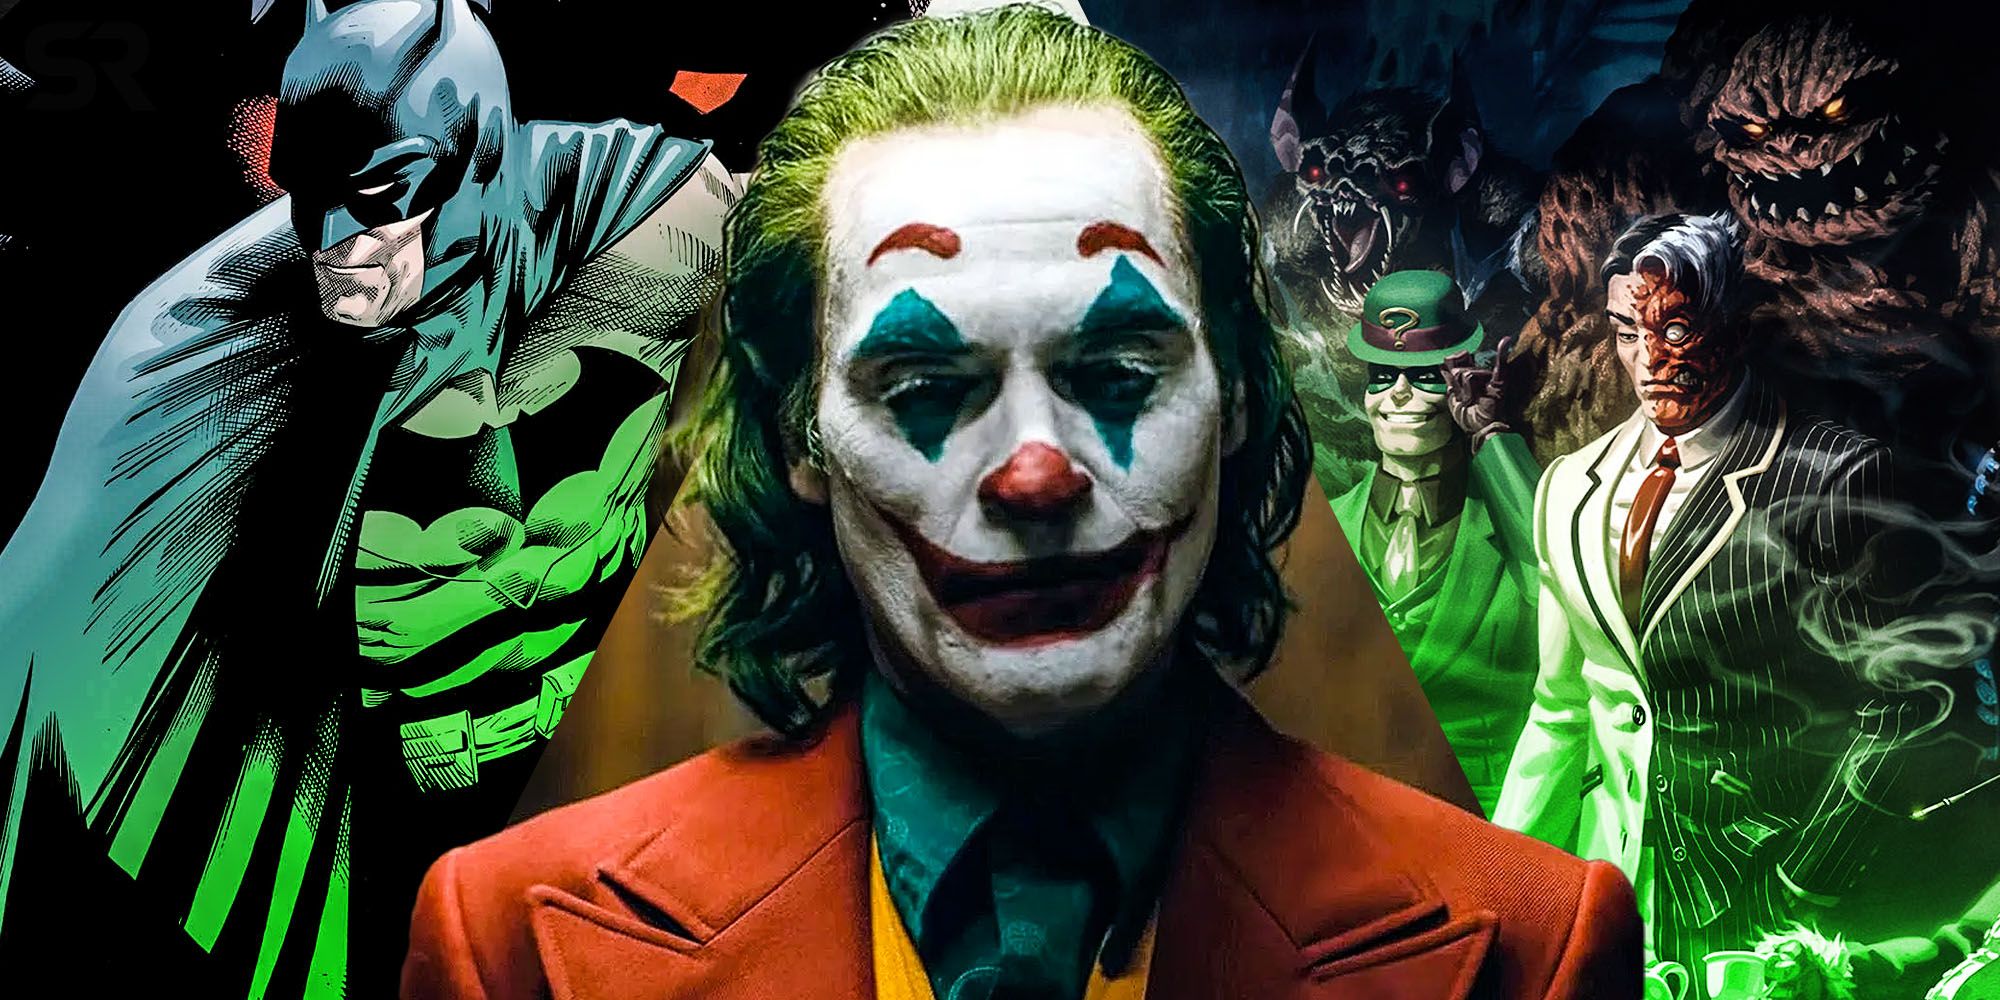 2. The Joker's iconic green hair in the Batman comics - wide 7